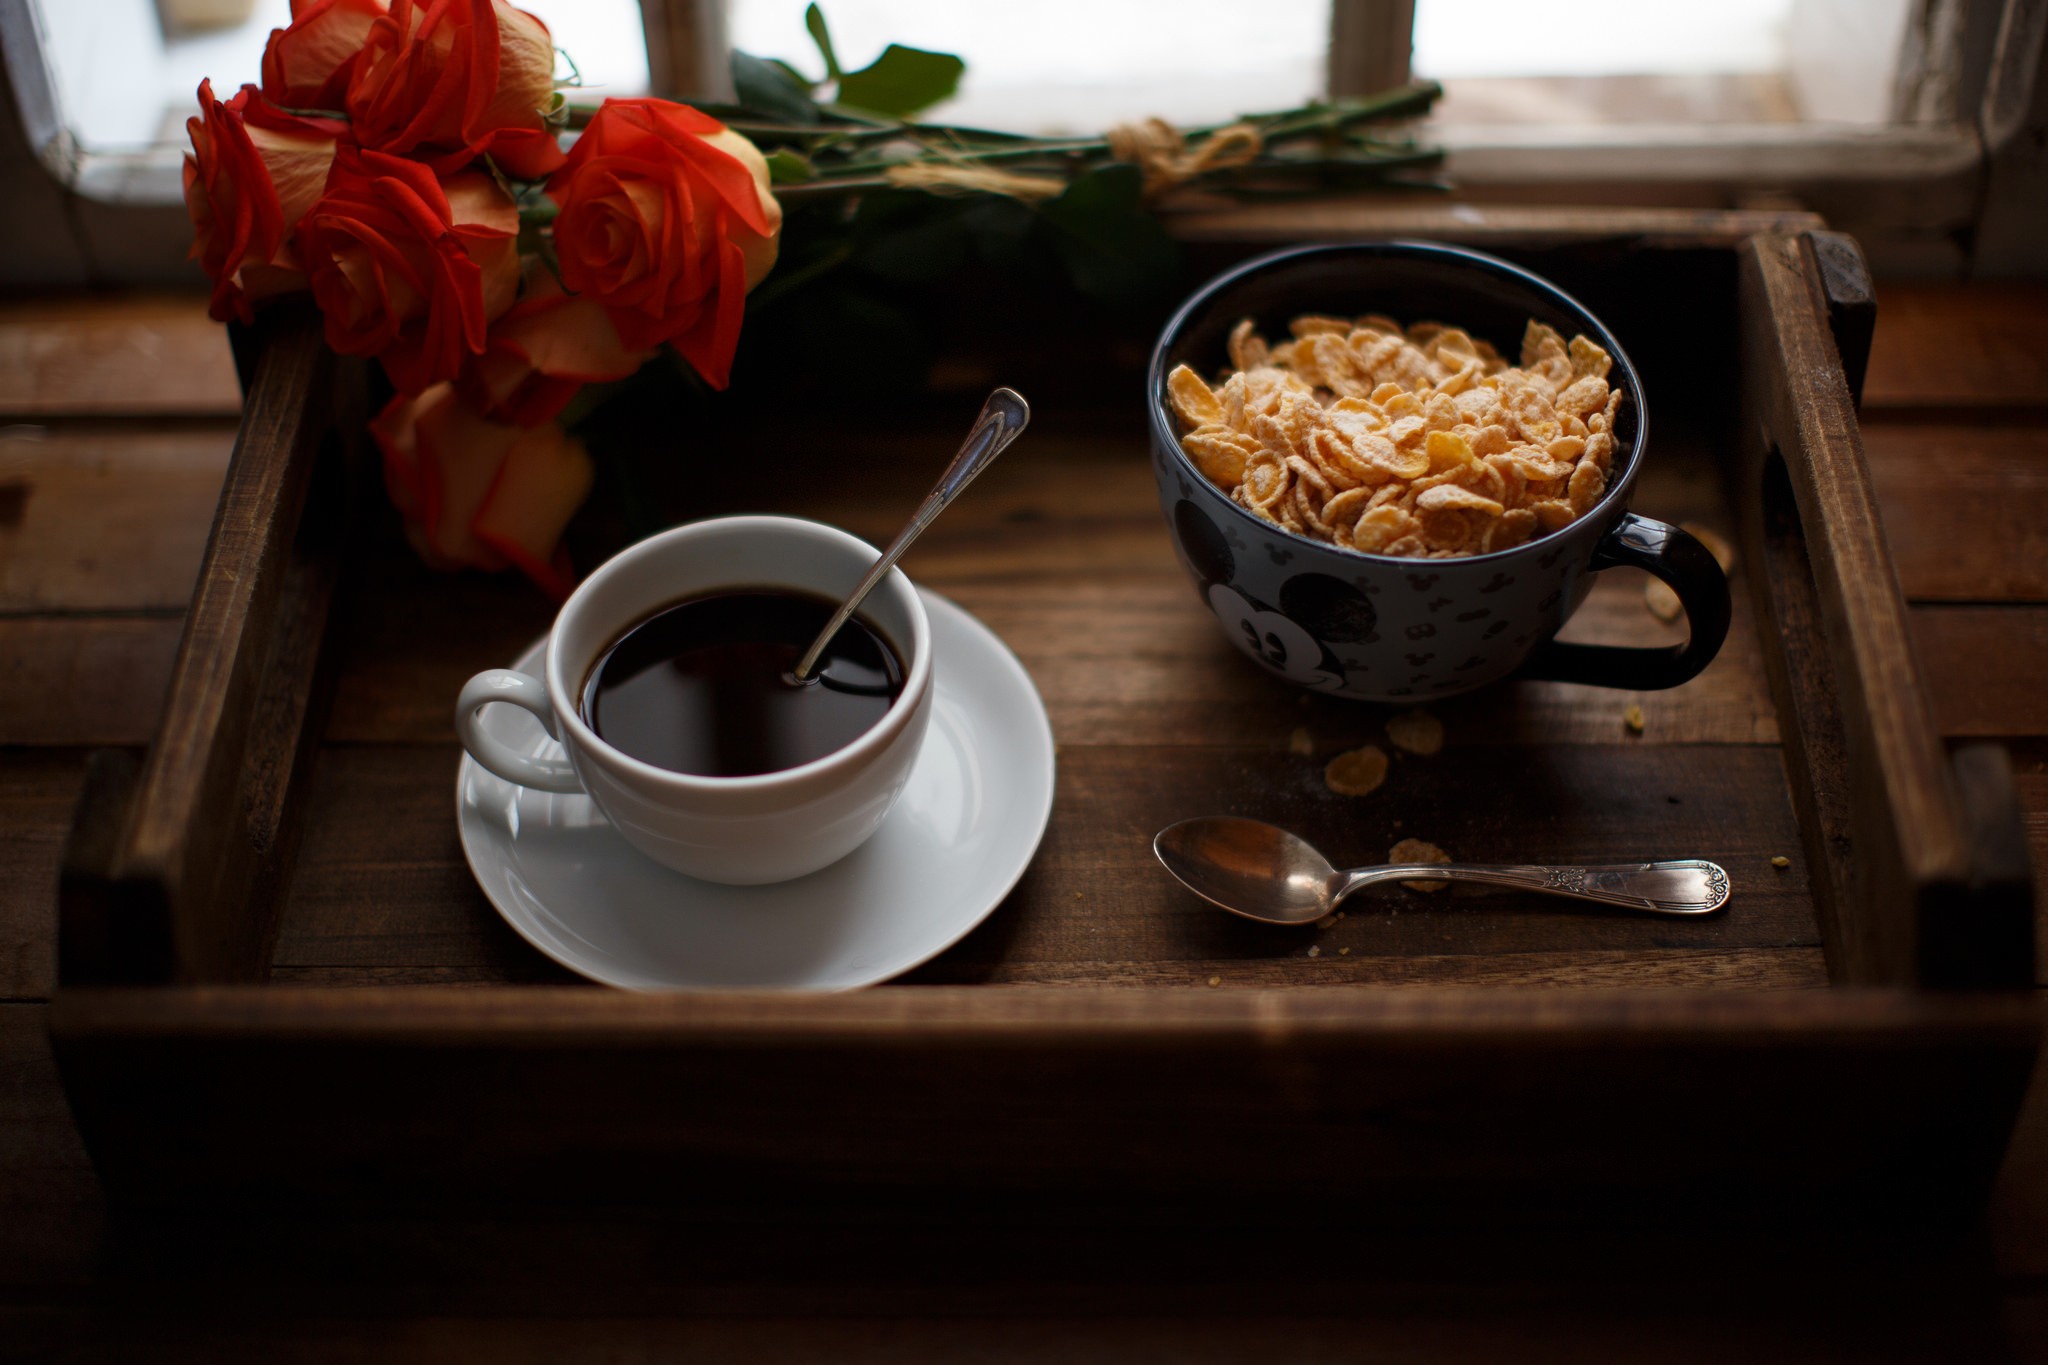 General 2048x1365 breakfast coffee food cup cereal spoon flowers rose still life indoors